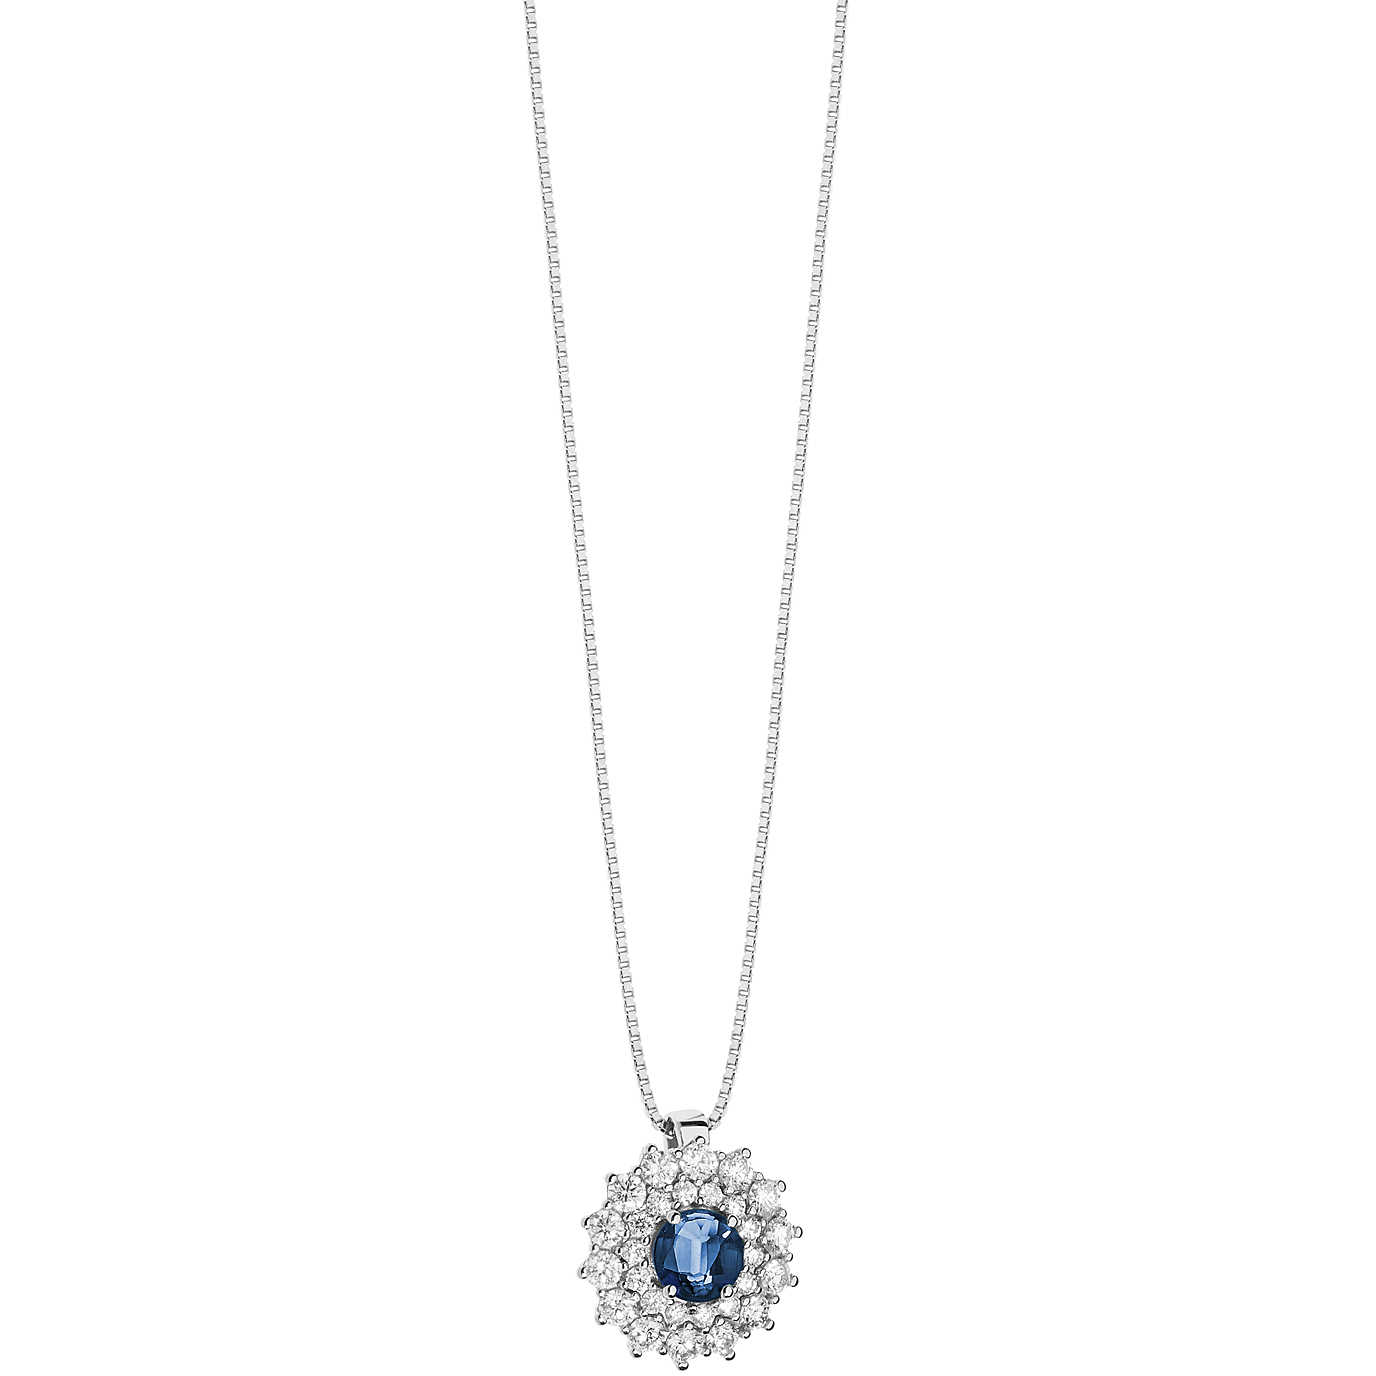 Orion GLB 1477 Women's Jewelry Necklace